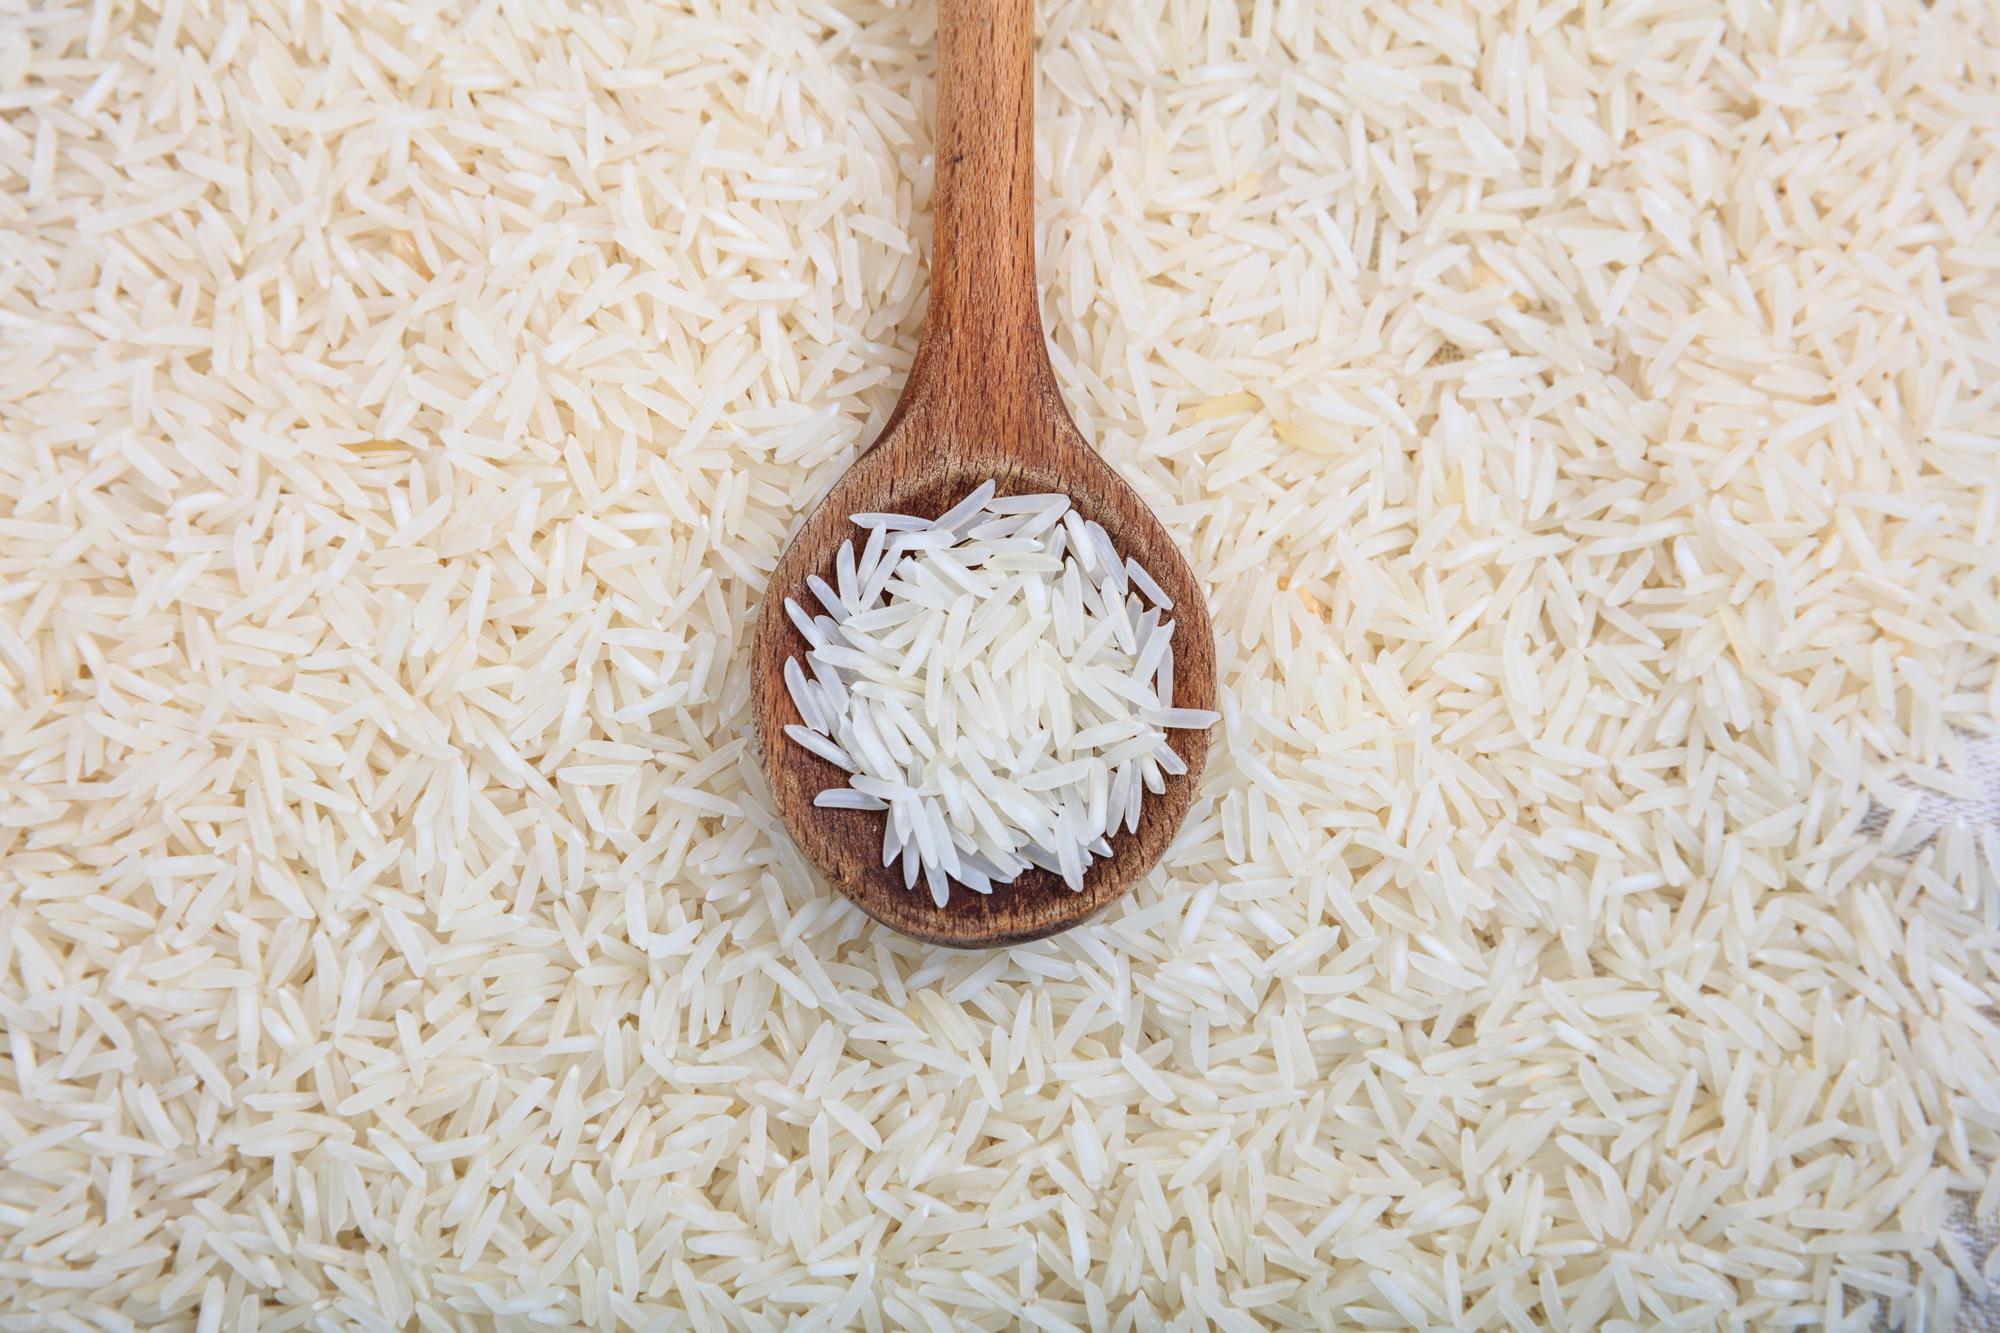 Басмати: польза, вред и калорийность риса | food and health